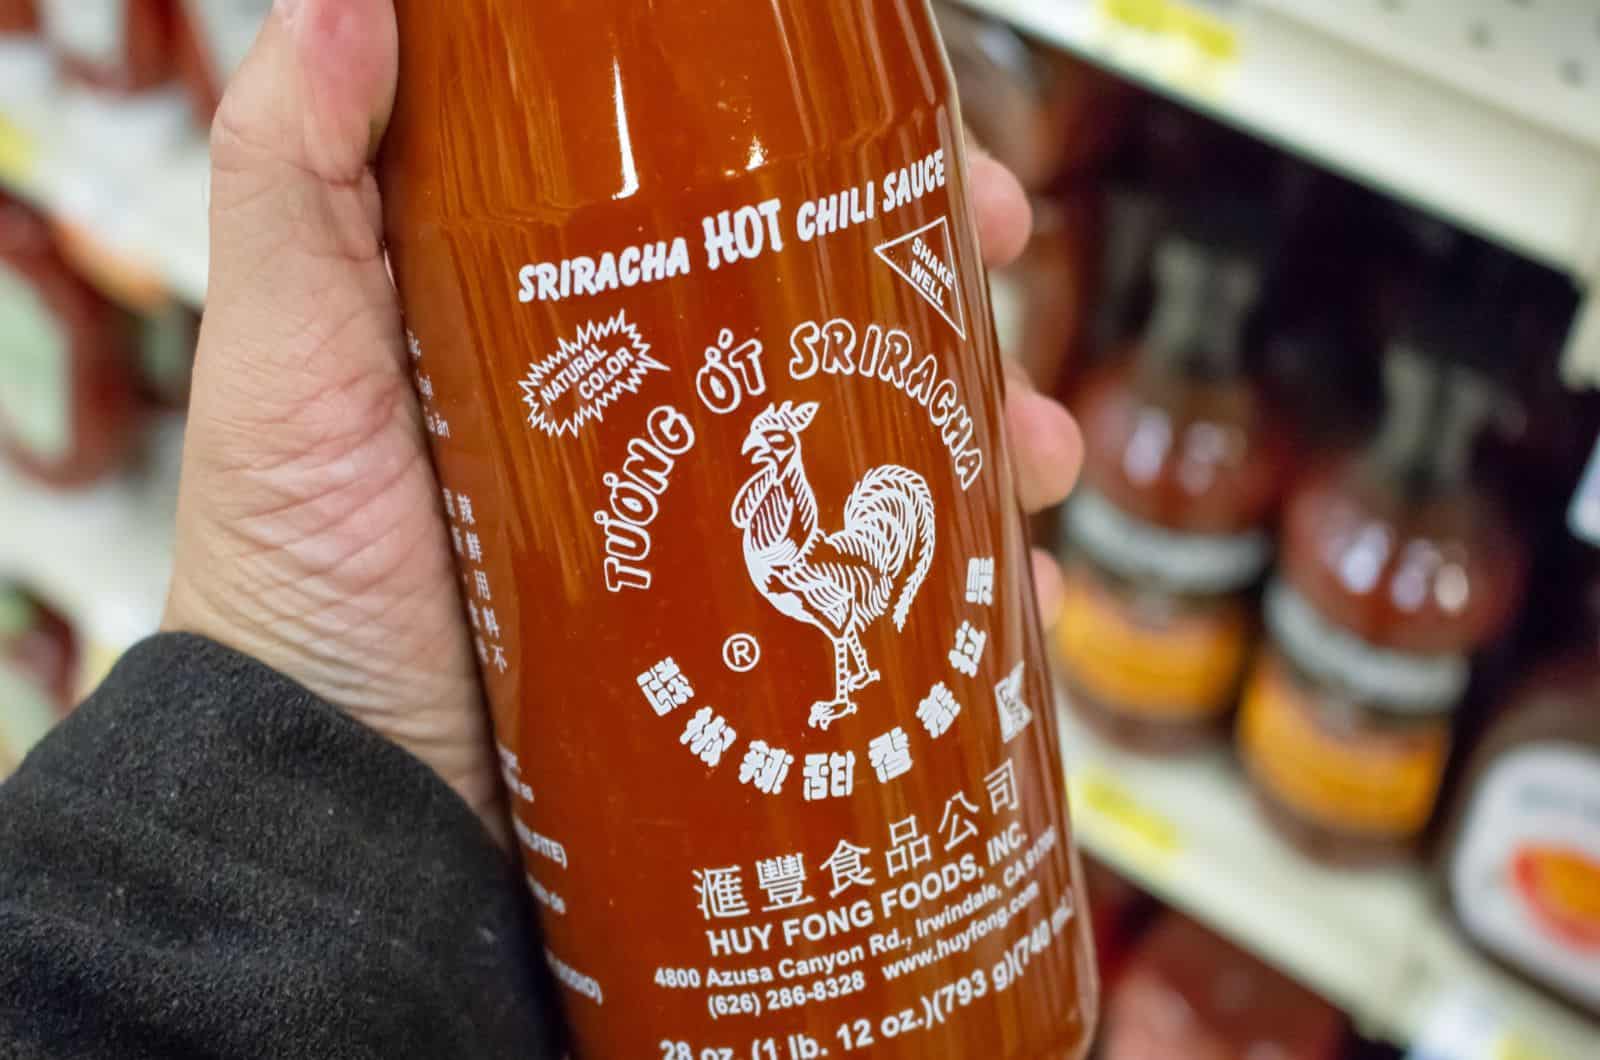 la main tient une bouteille de sauce chili Sriracha